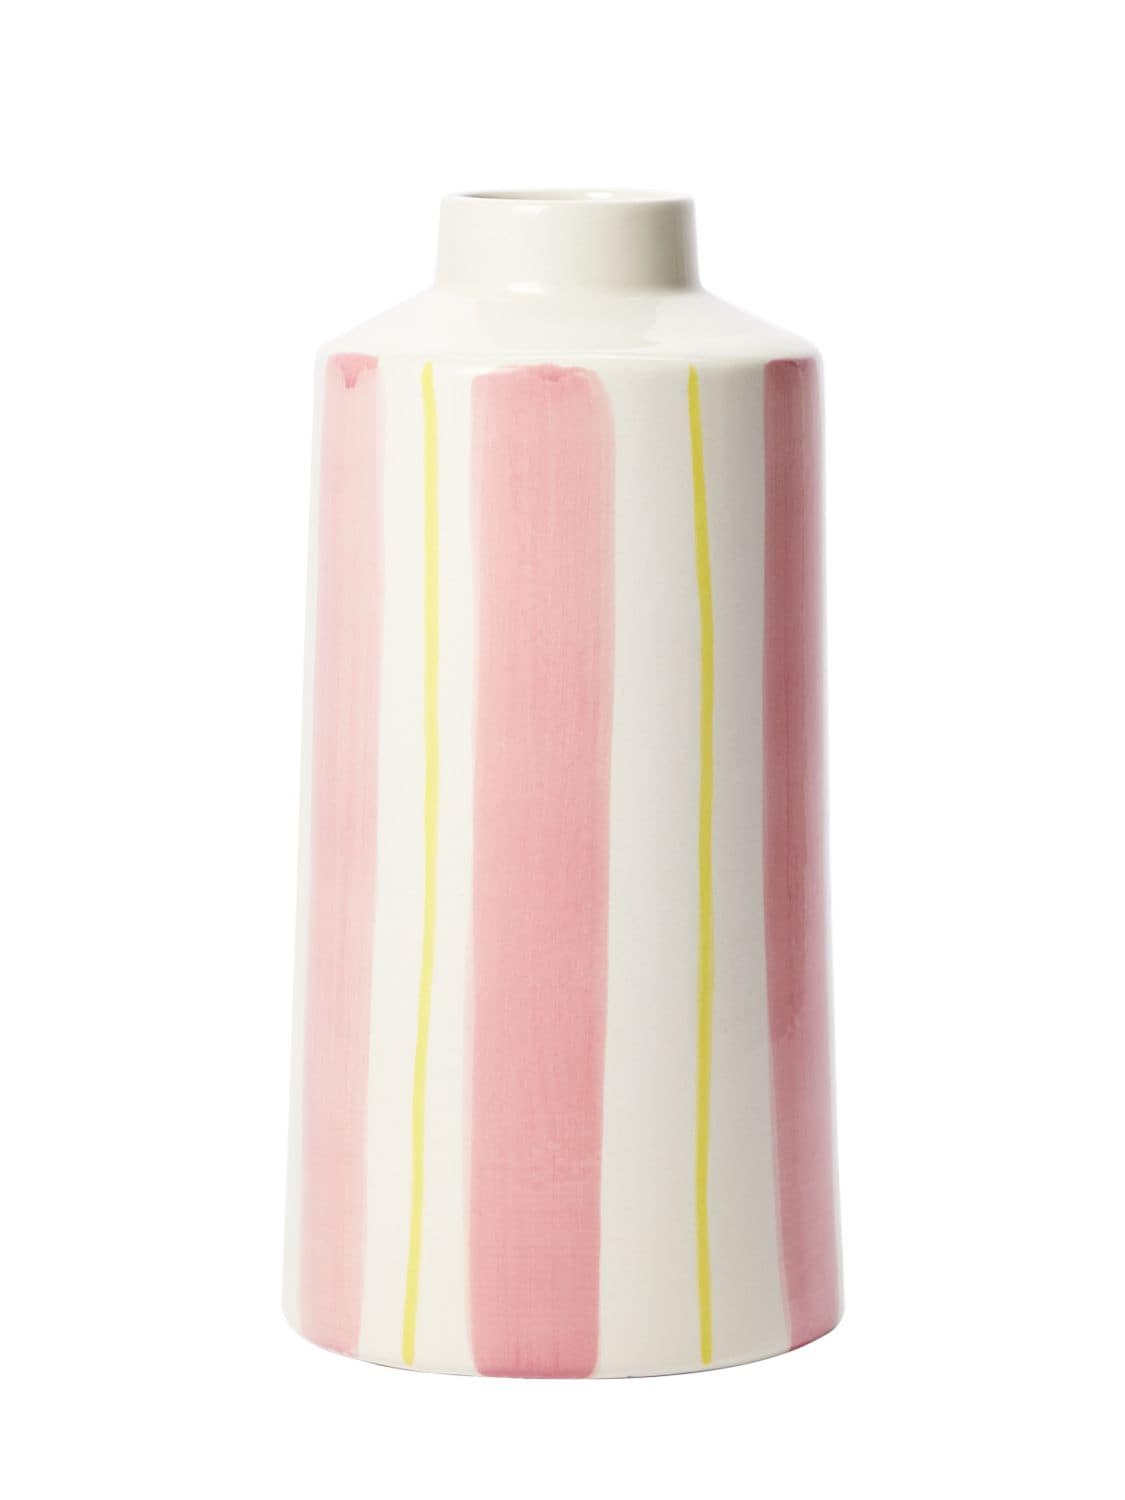 The Conran Shop Small Pink Stripes Vase